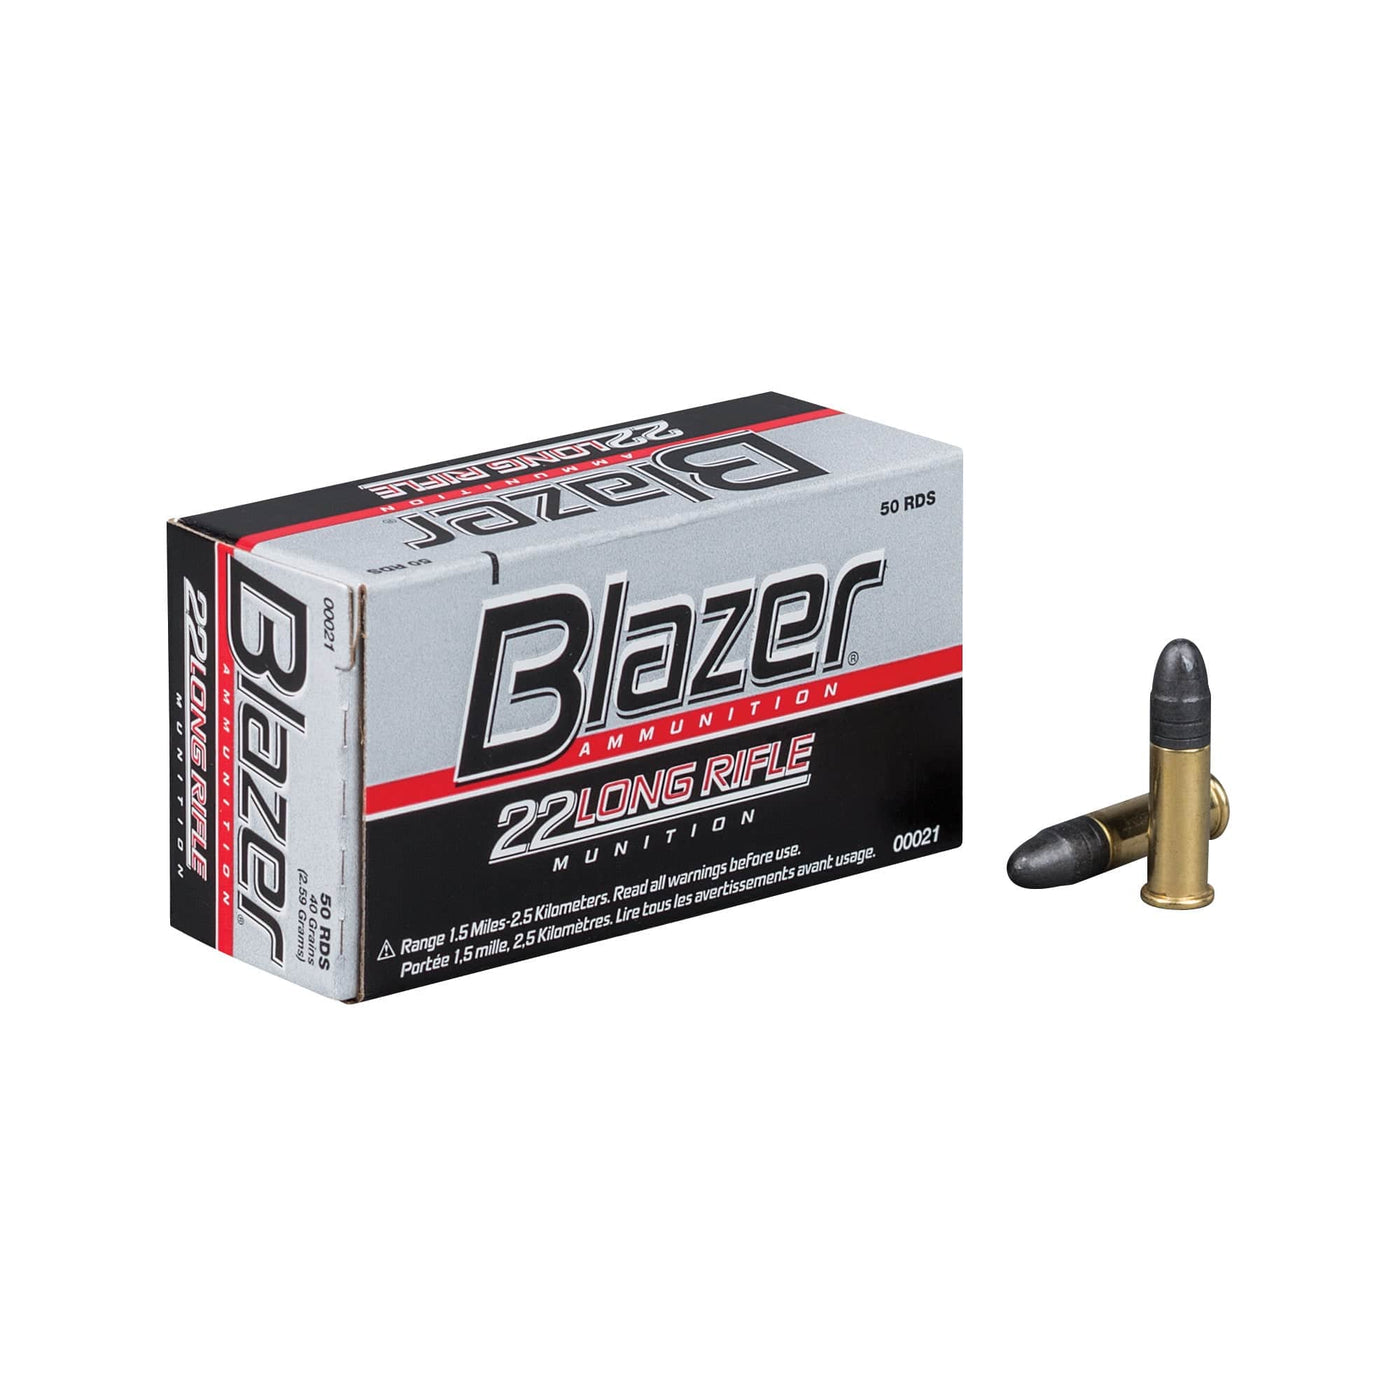 CCI Blazer 22lr Hs 50/5000 Ammunition